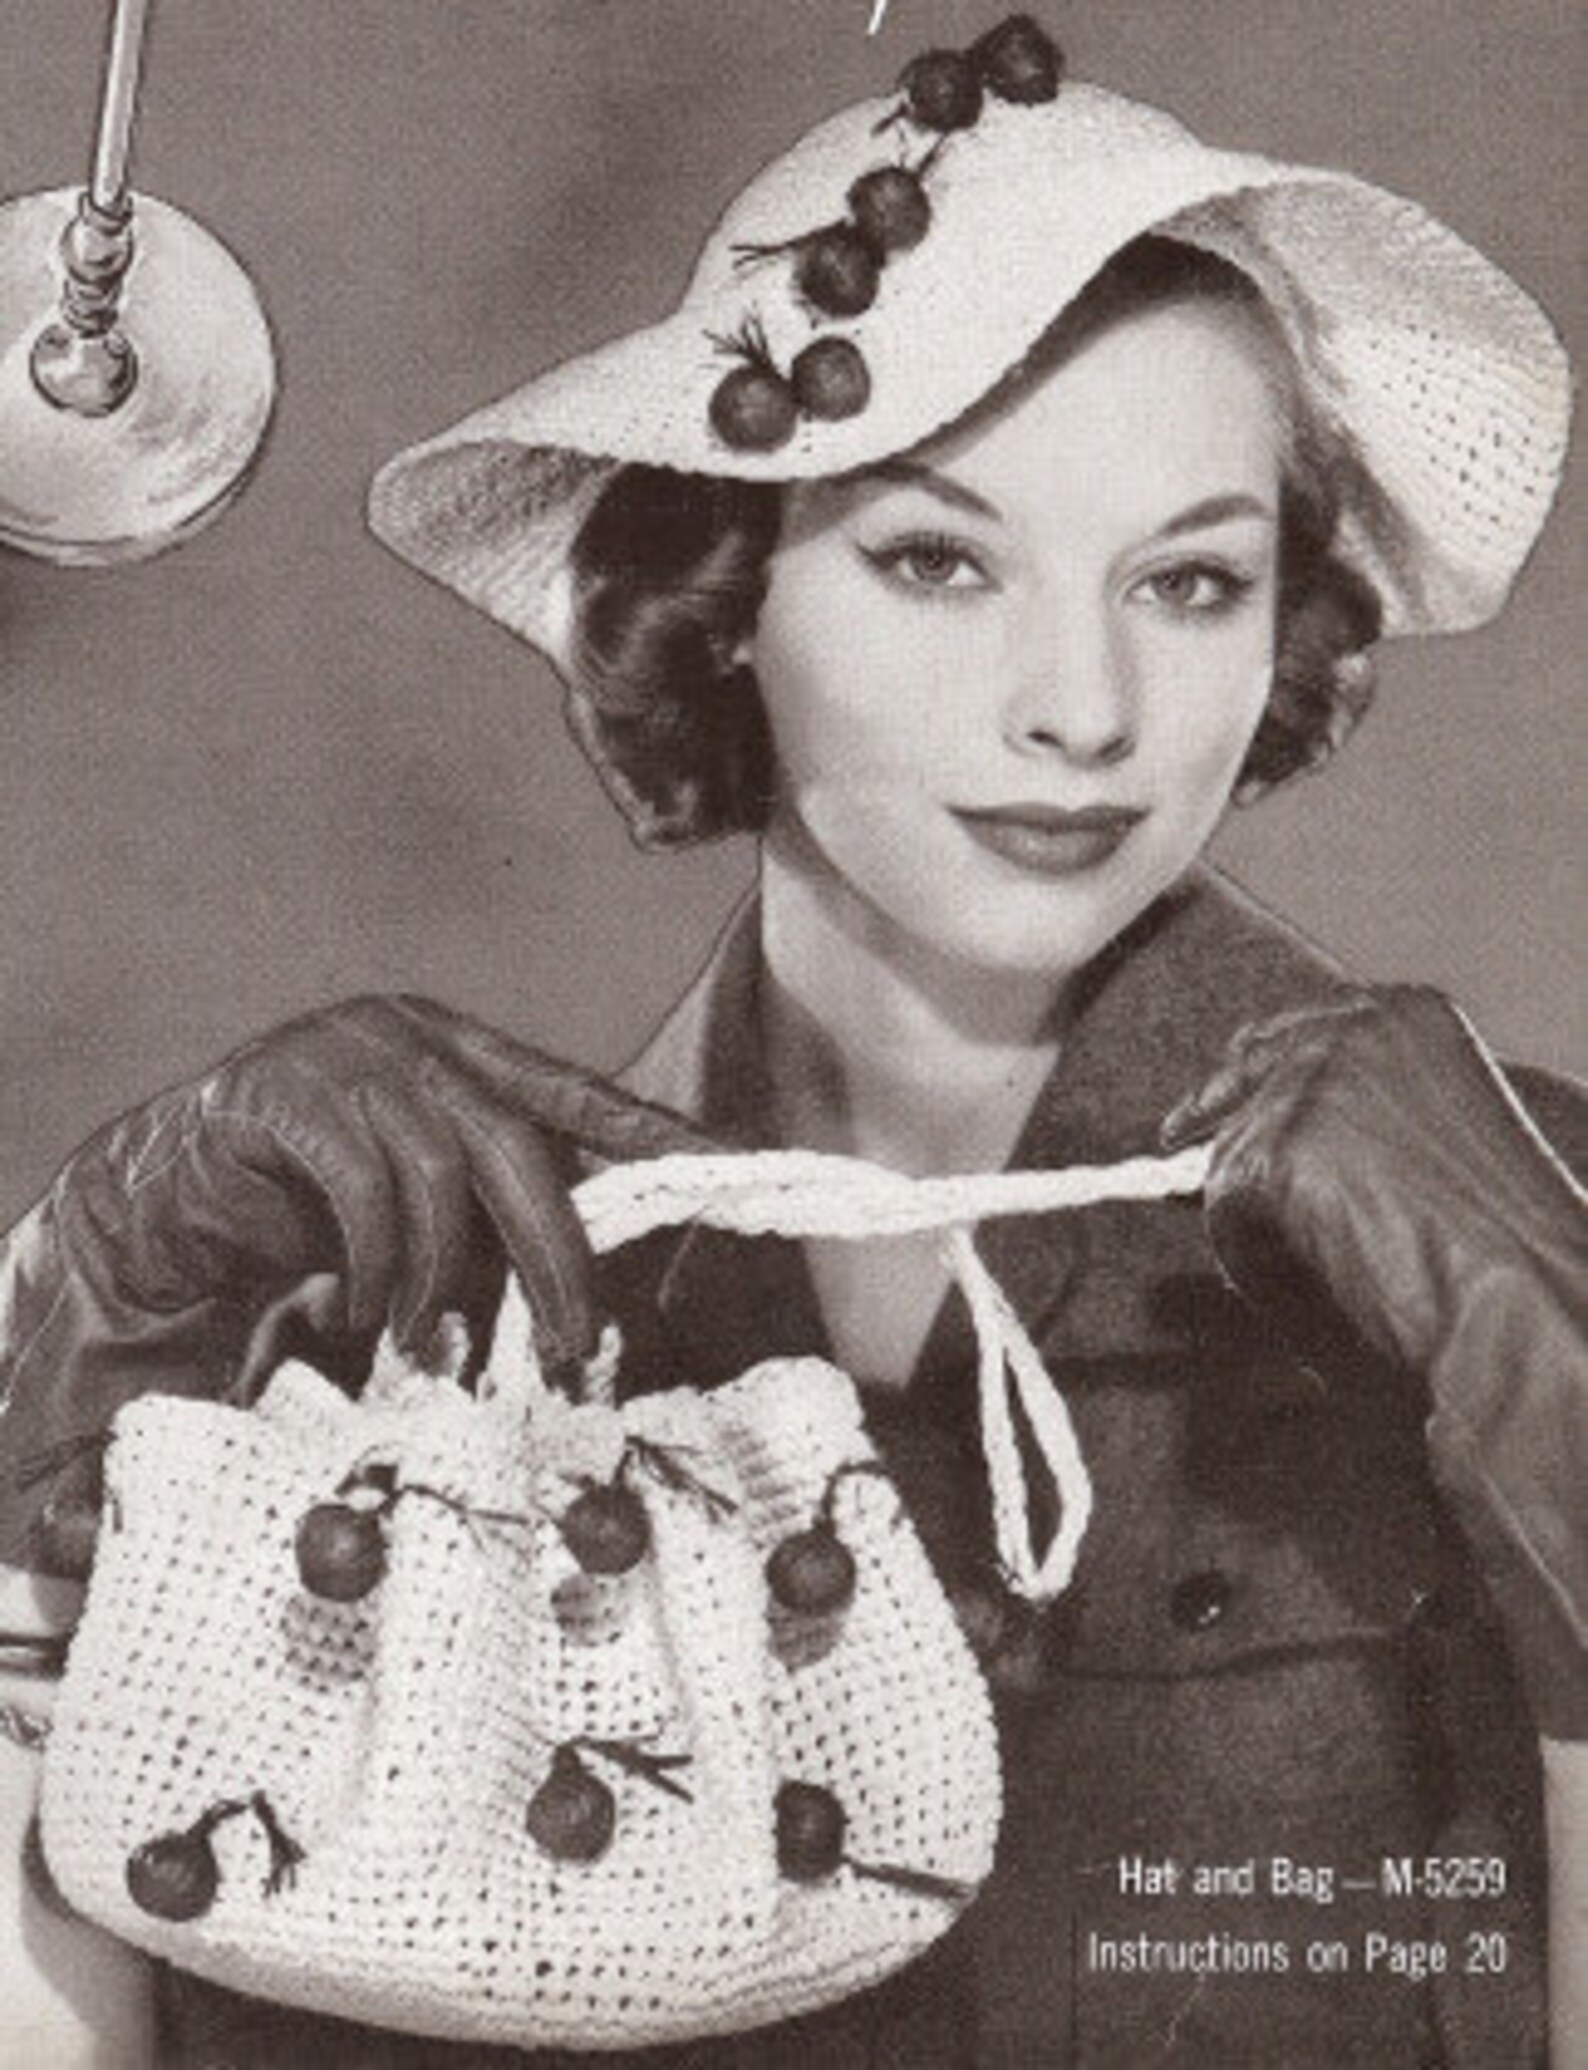 Hats bags. Дамы с сумочкой 1950. Hat and Bag.